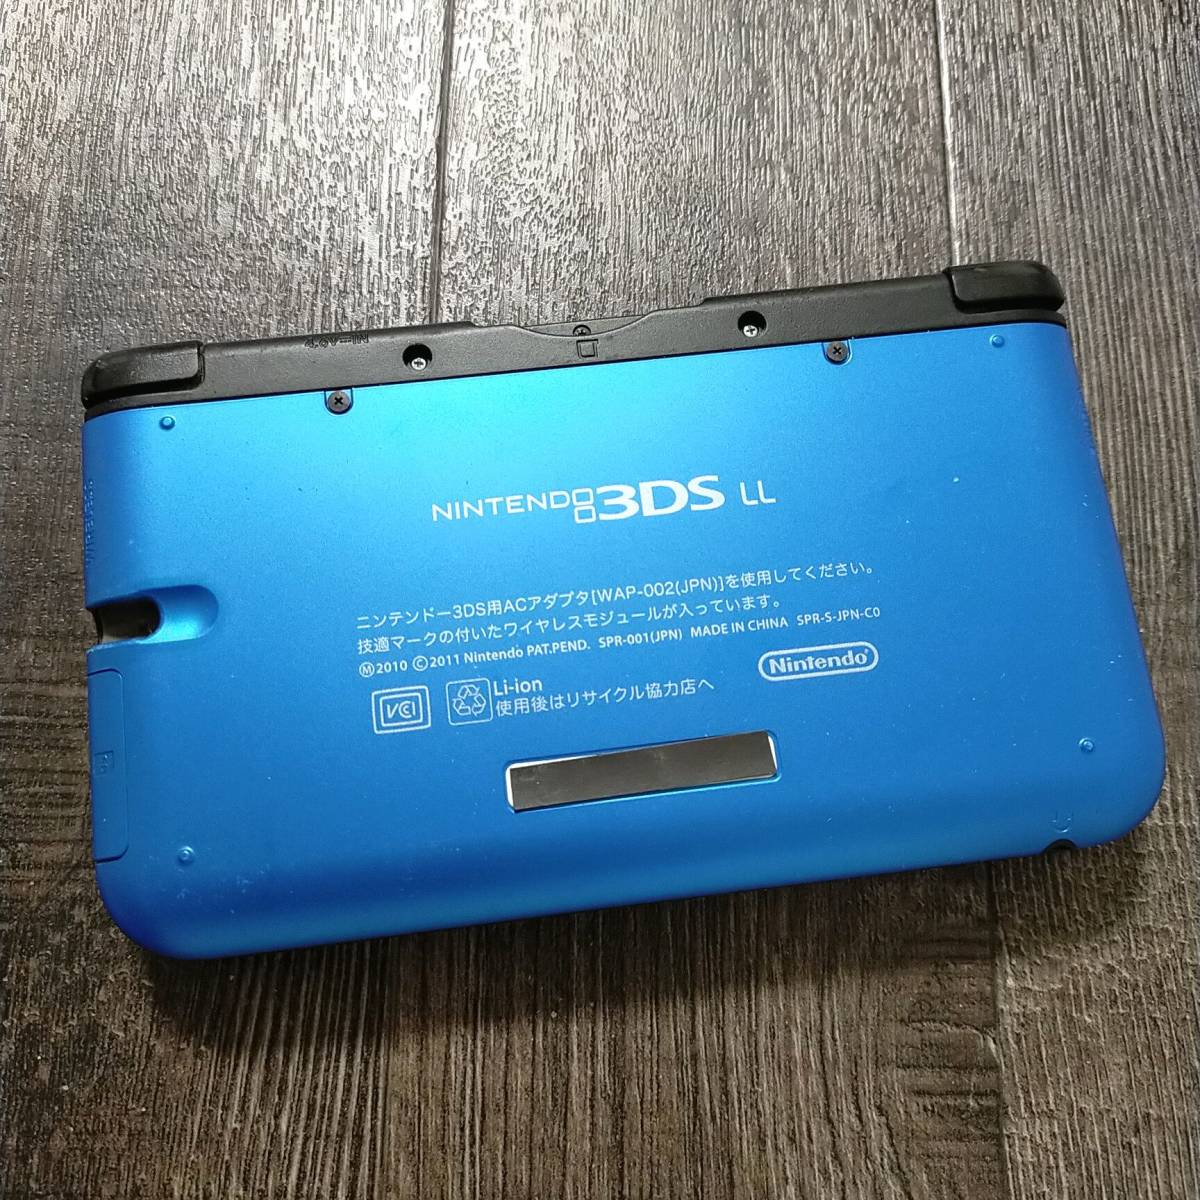 3dsll 本体 ブルー×ブラック 青黒 NINTENDO 3DS LL 中古 任天堂 送料